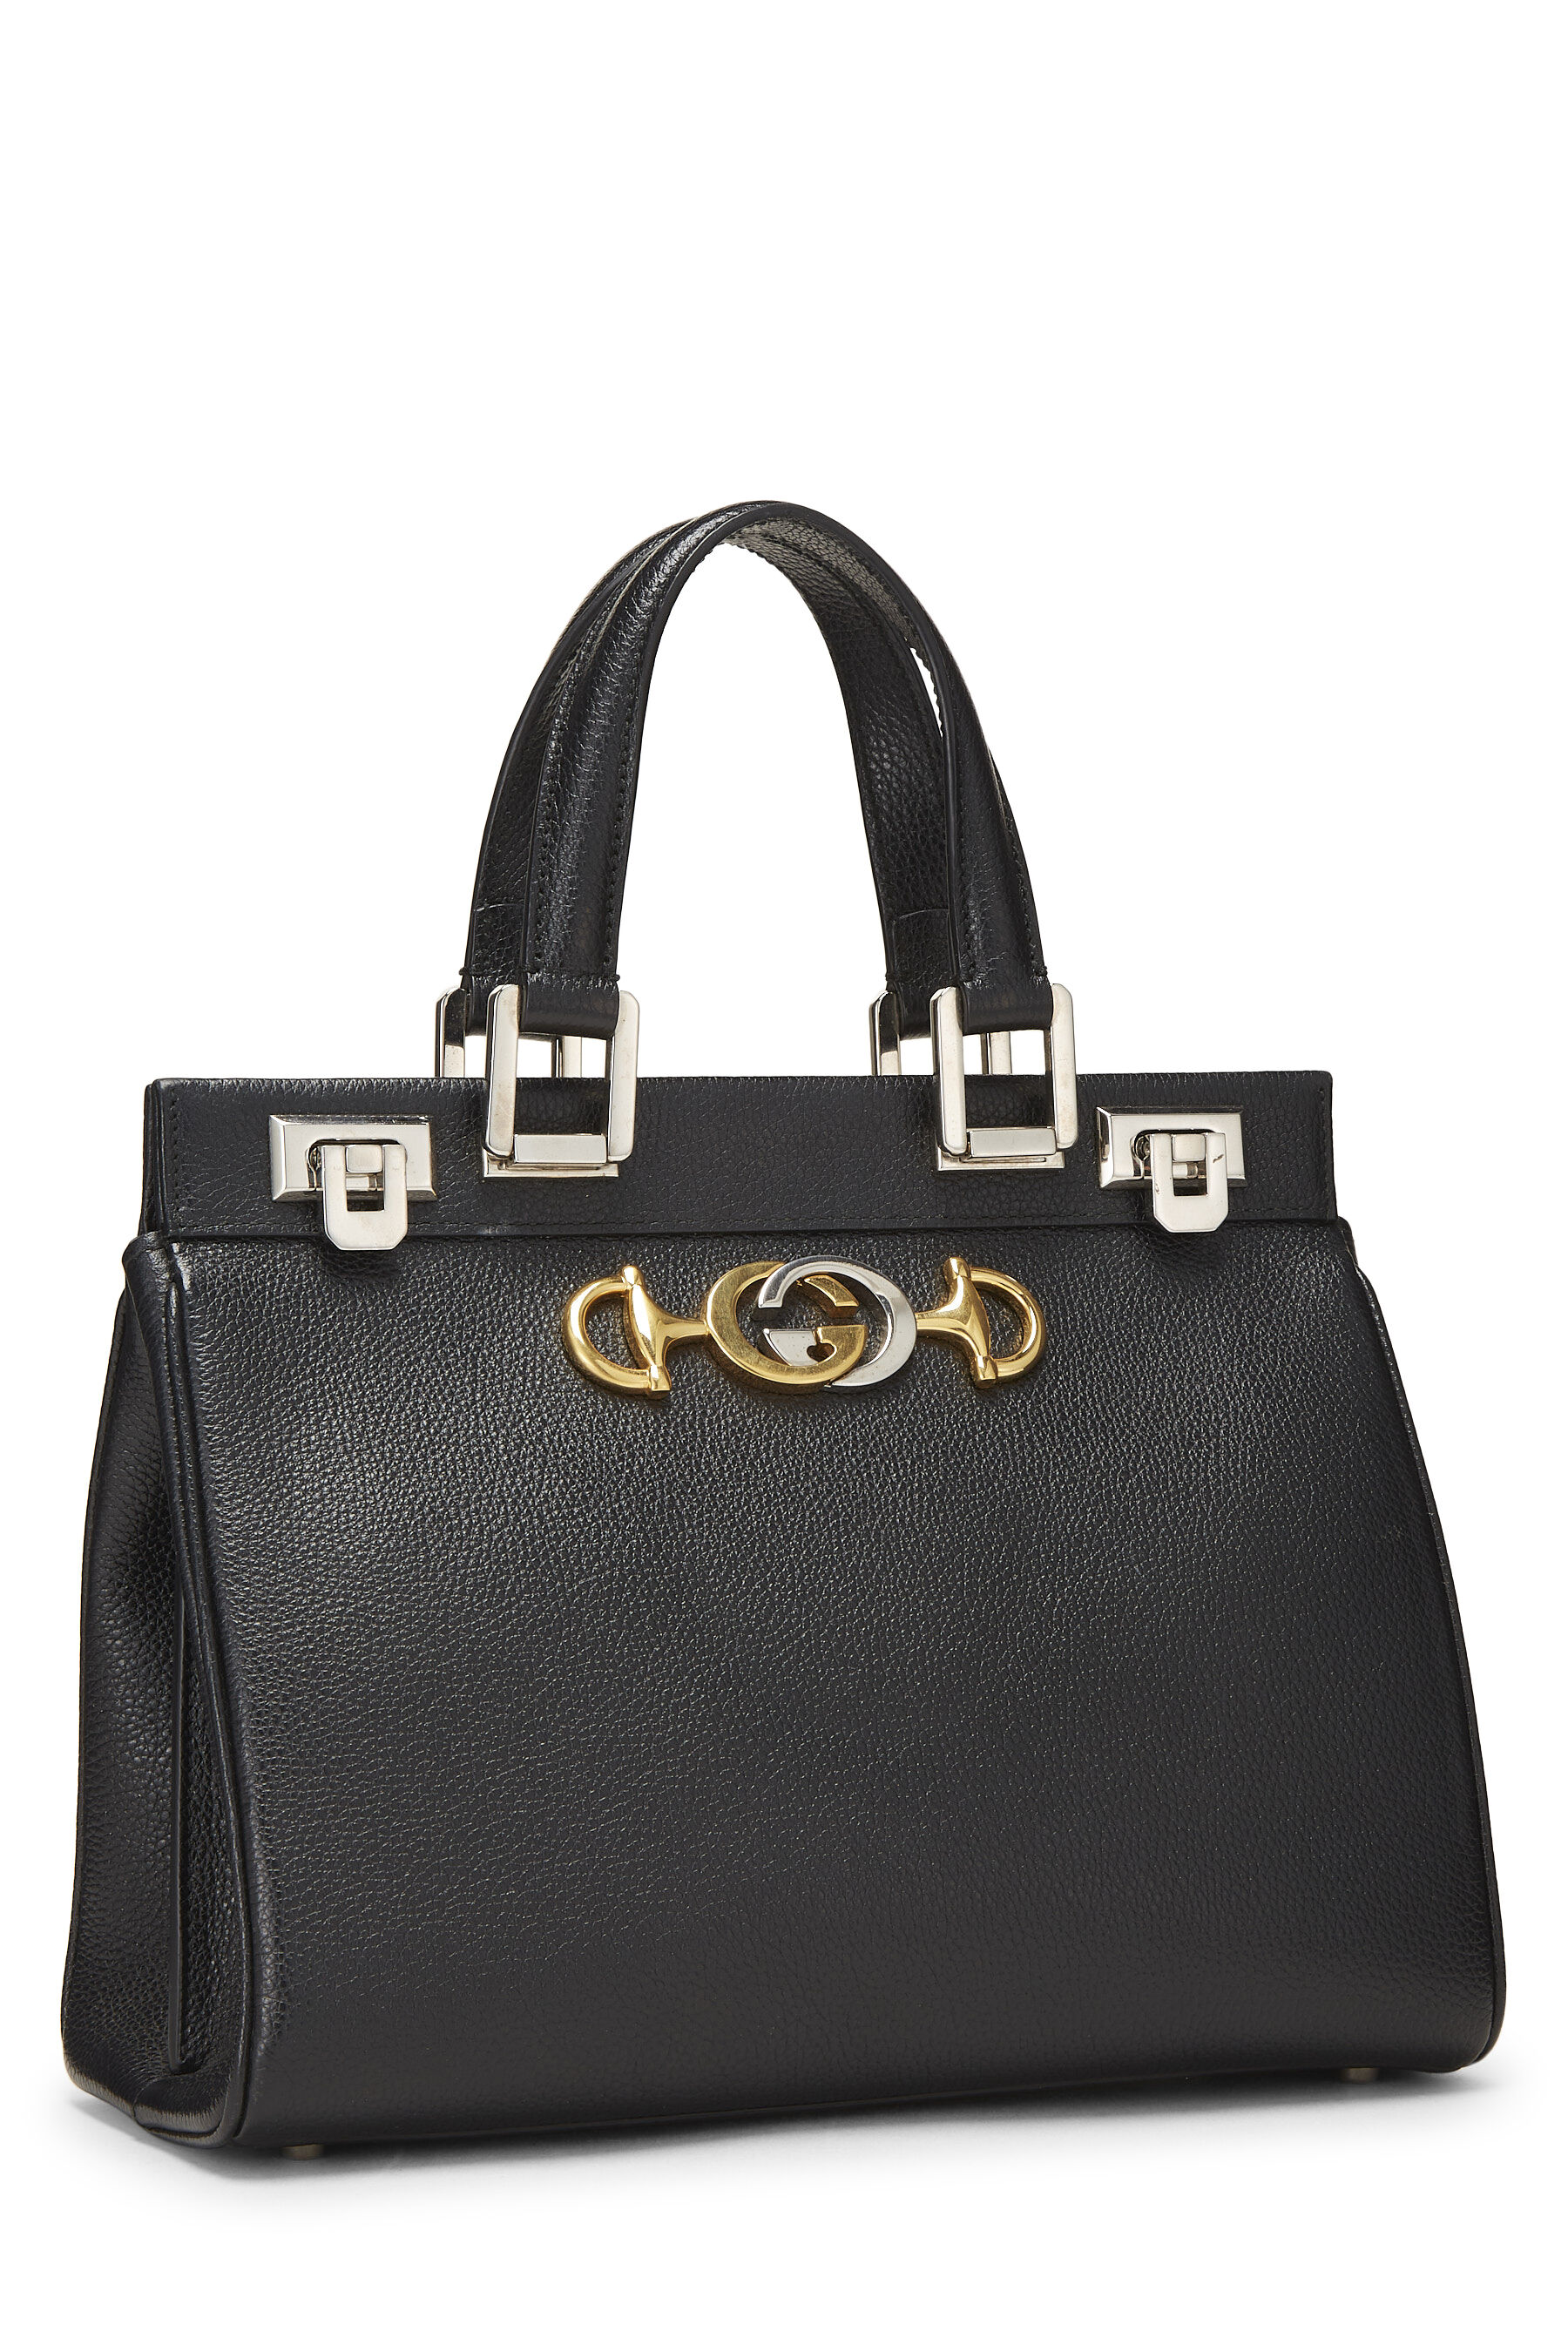 Black Leather Zumi Top Handle Bag Medium